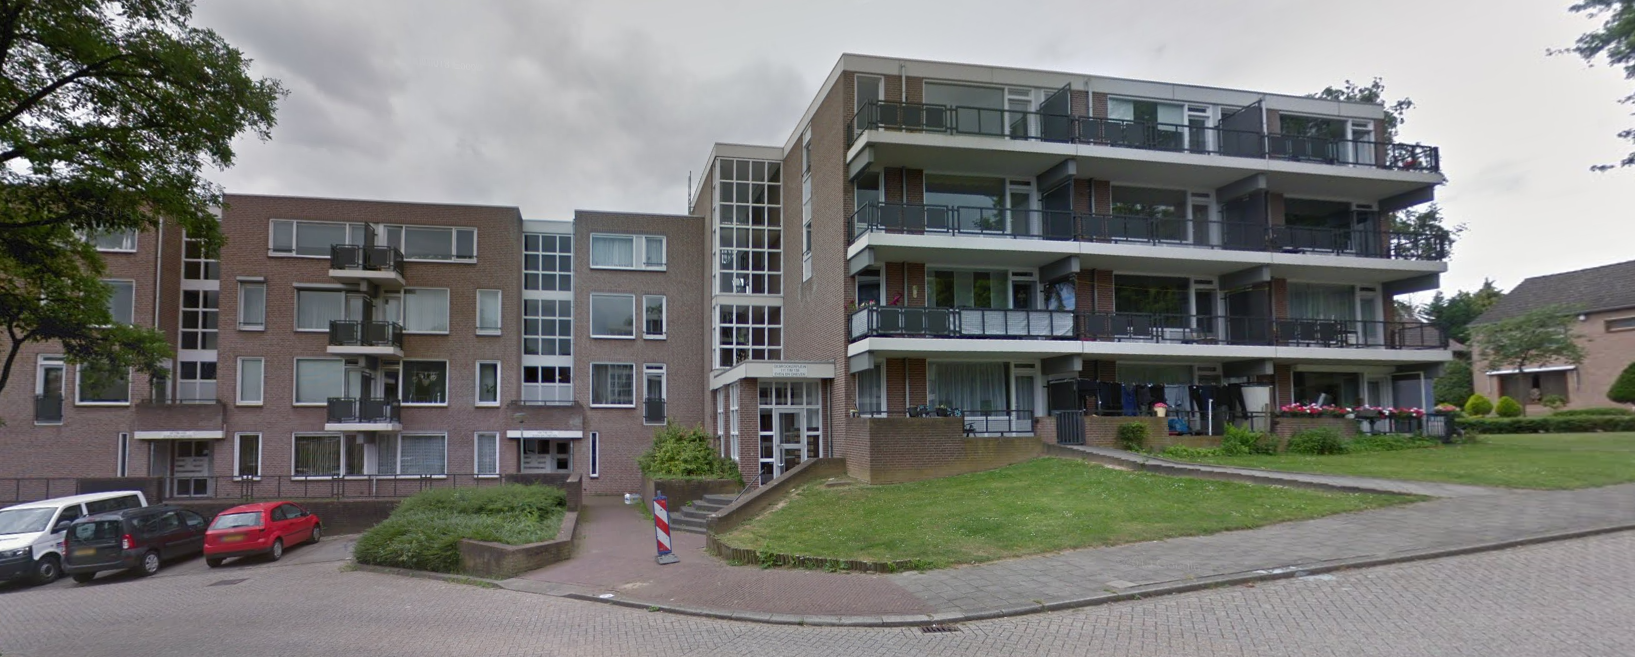 Gebrookerplein 129, 6431 LX Hoensbroek, Nederland